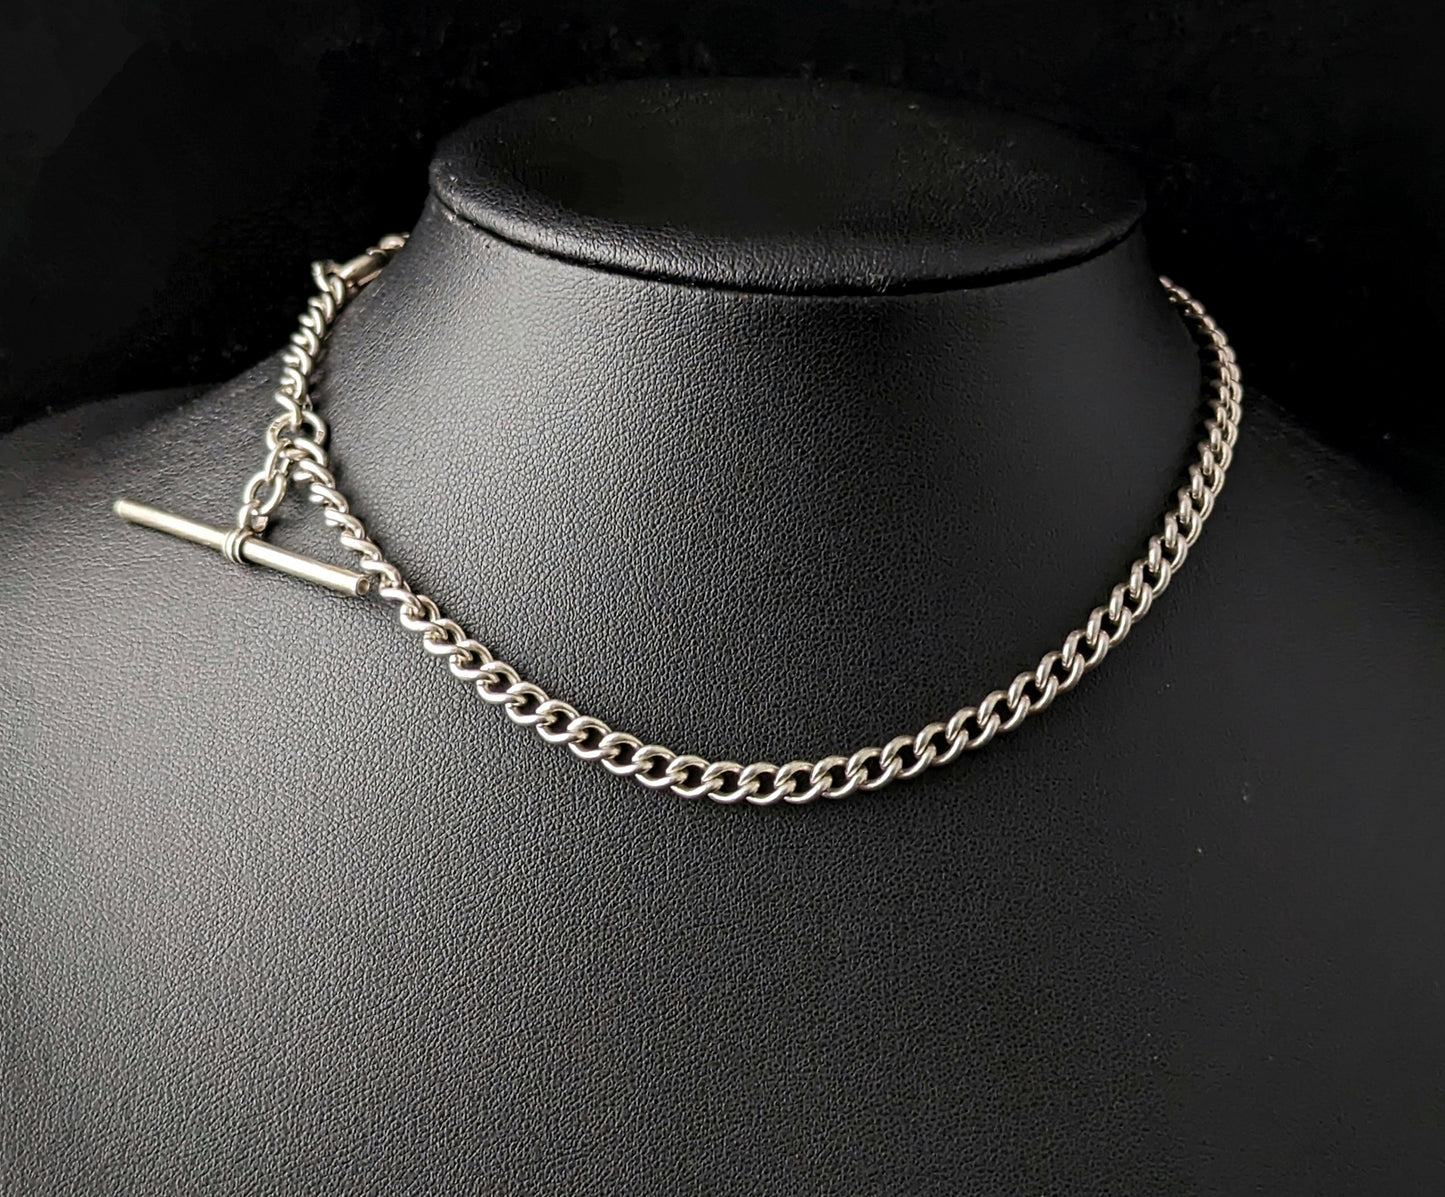 Vintage sterling silver Albert chain, watch chain